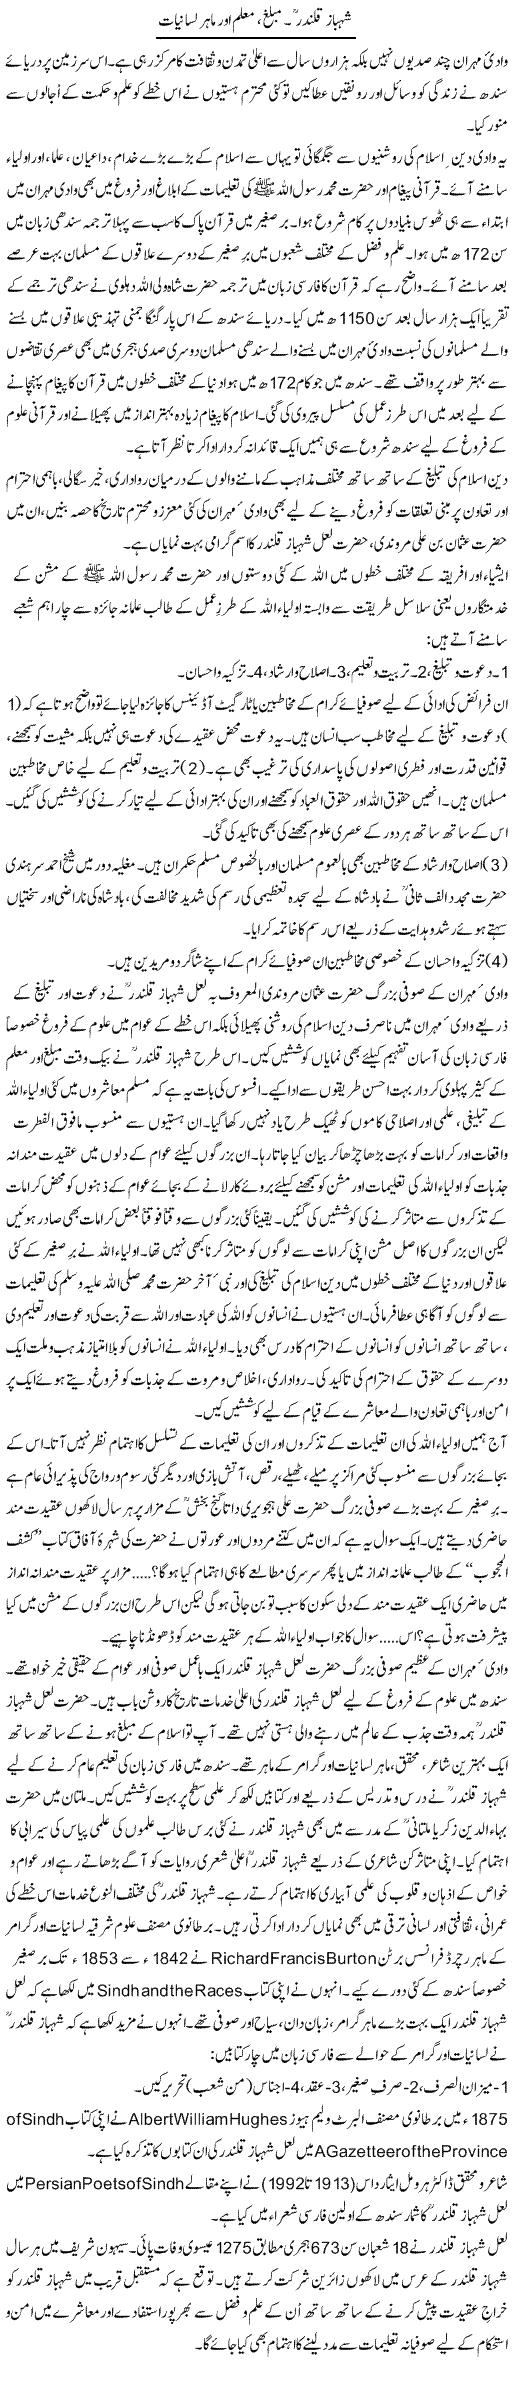 Shahbaz Qalandar. Muballigh, Muallim Aur Maahir Lisaniyat | Dr. Waqar Yousuf Azeemi | Daily Urdu Columns